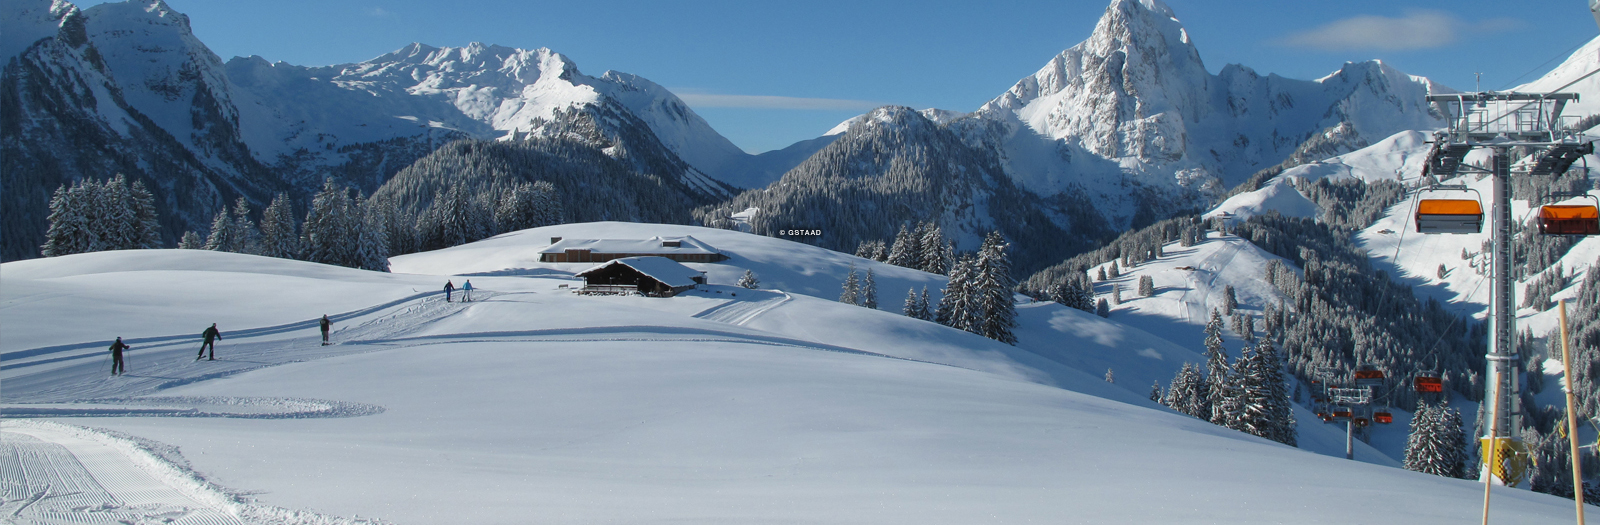 gstaad ski resort, gstaad switzerland